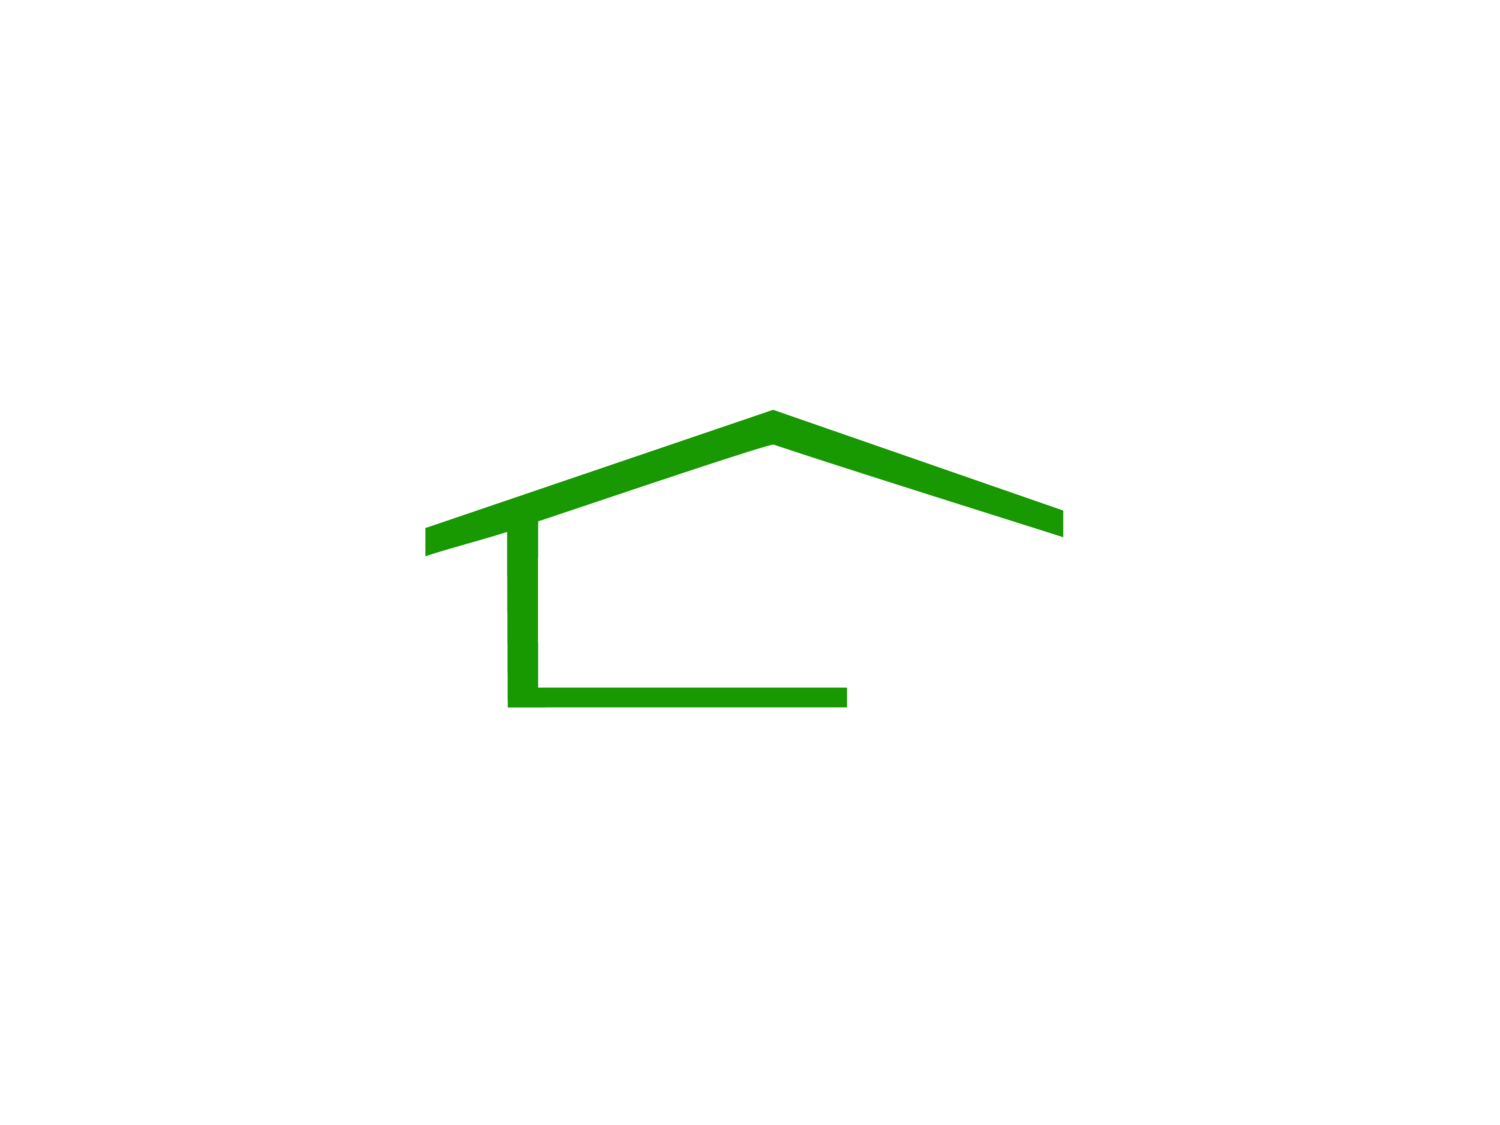 Your Outdoor Room